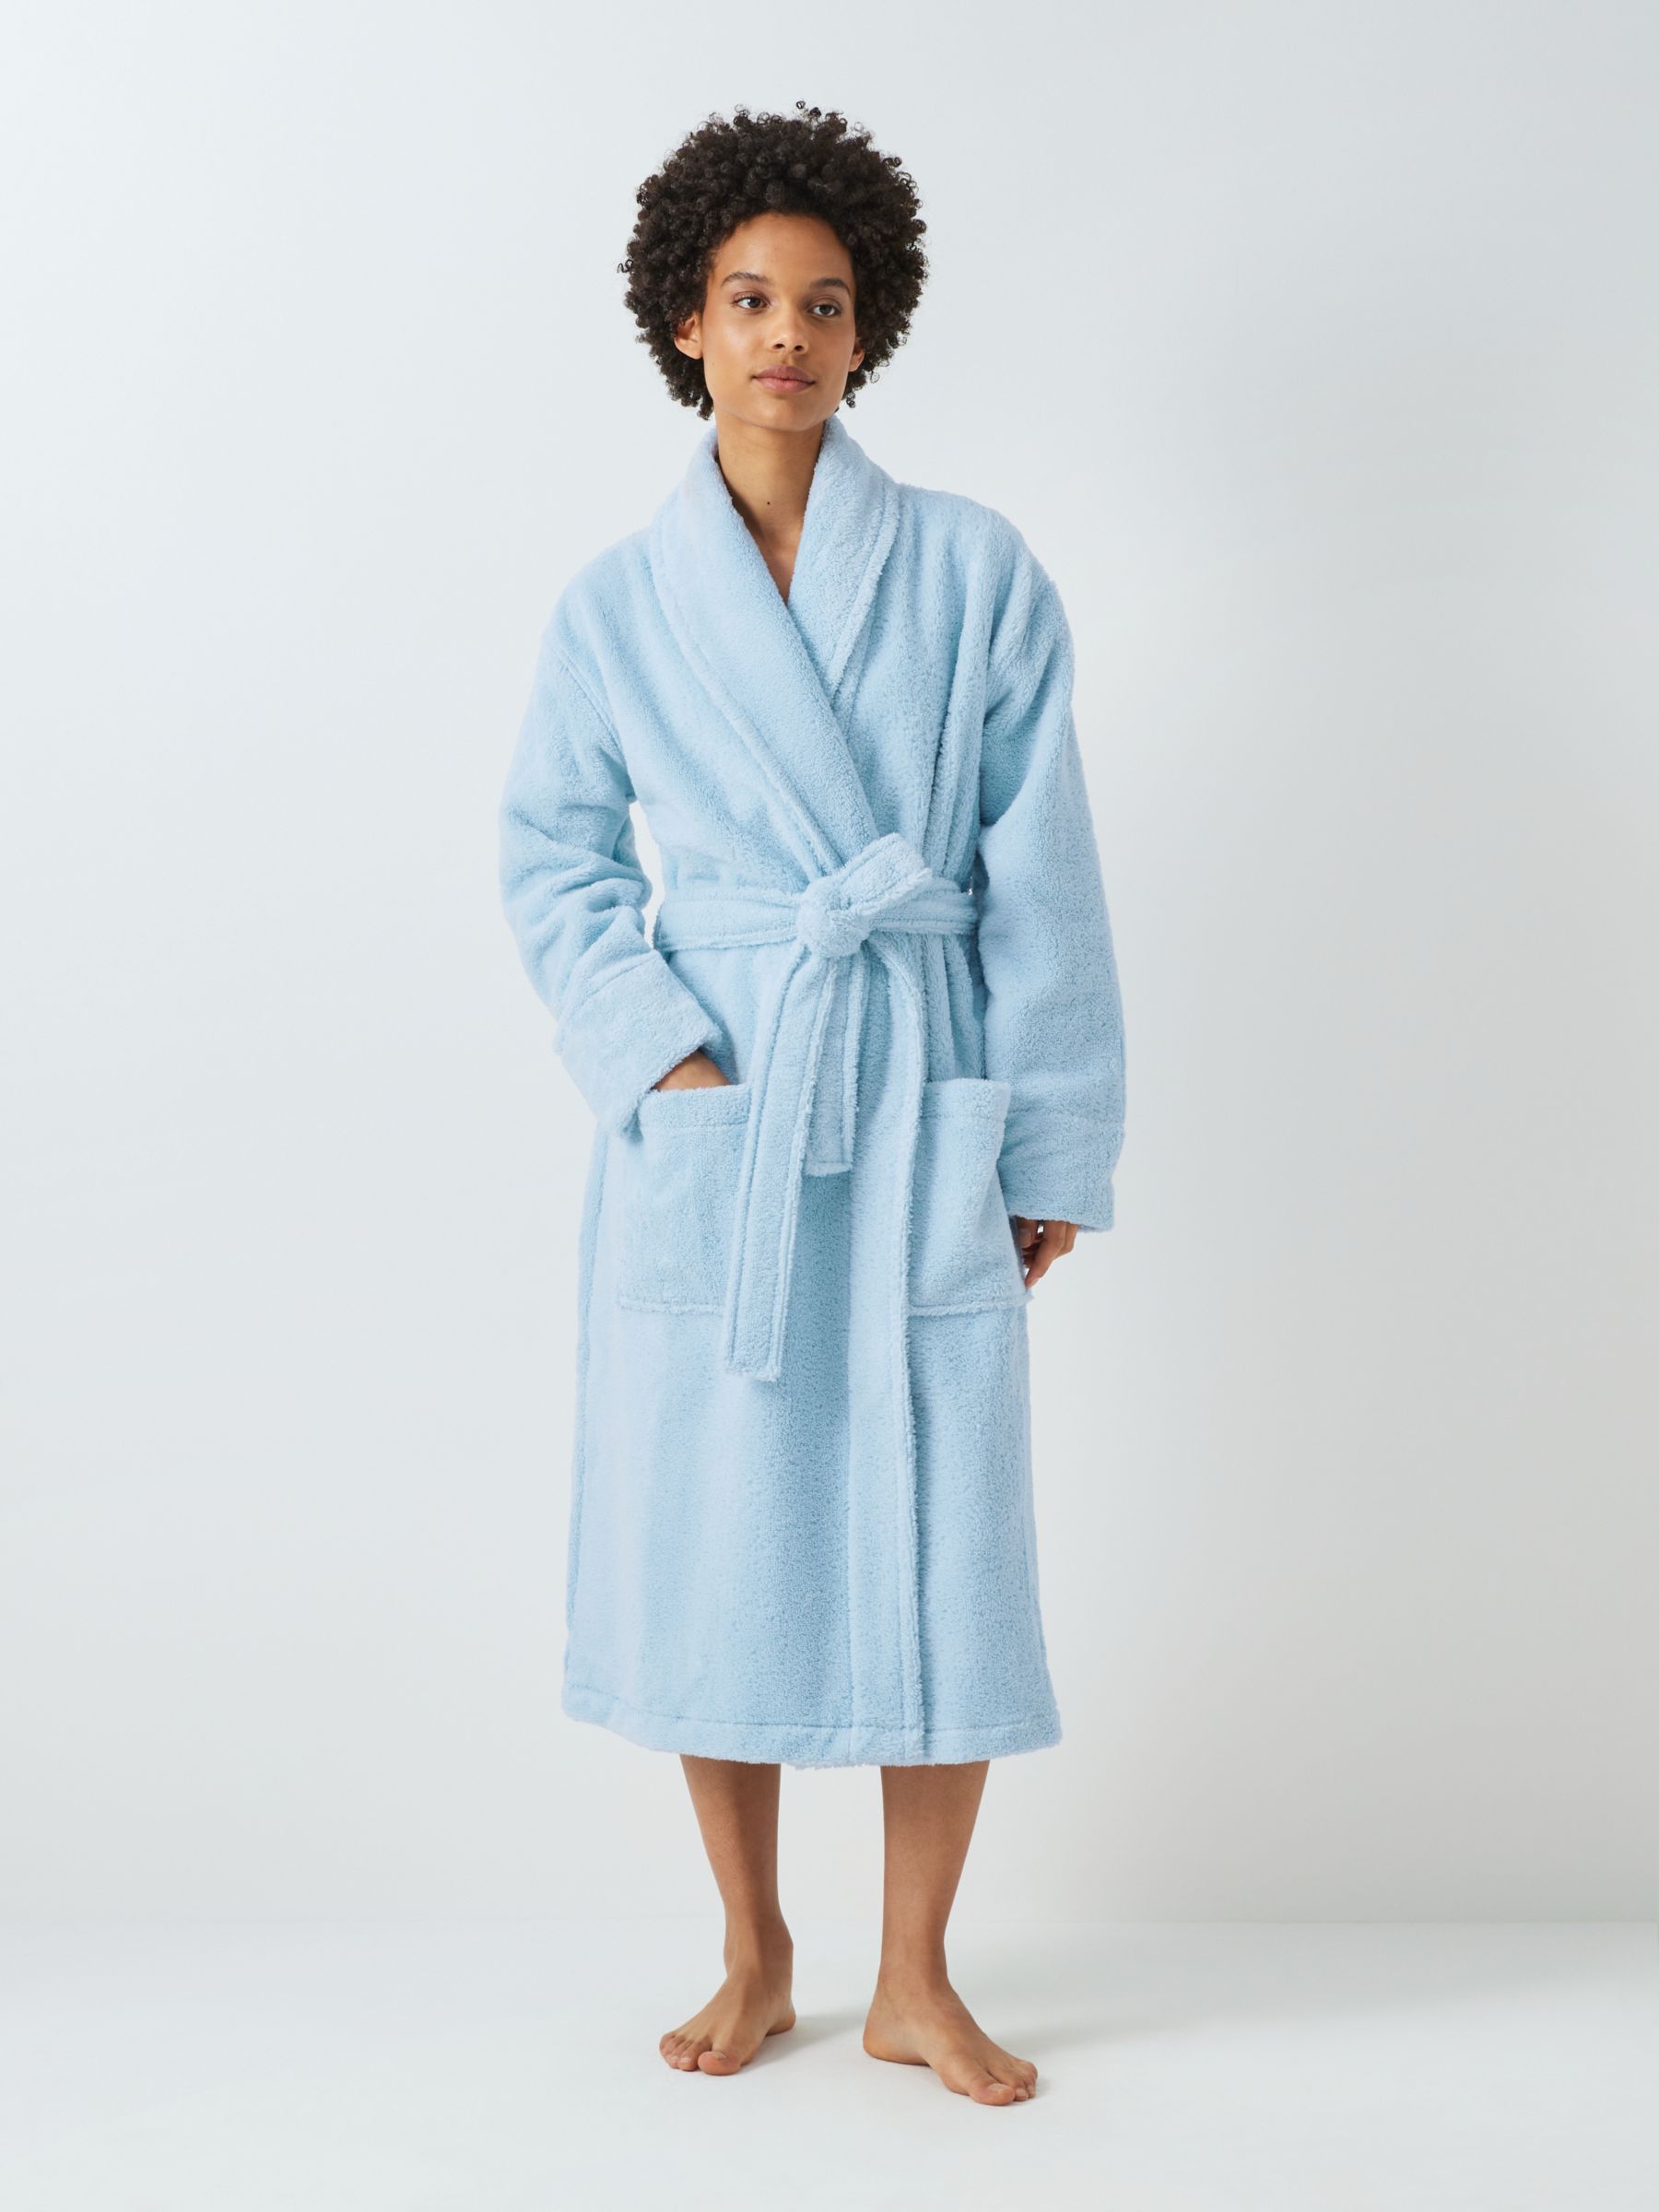 John Lewis john lewis girls hooded fleecy dressing gown robe age 5 